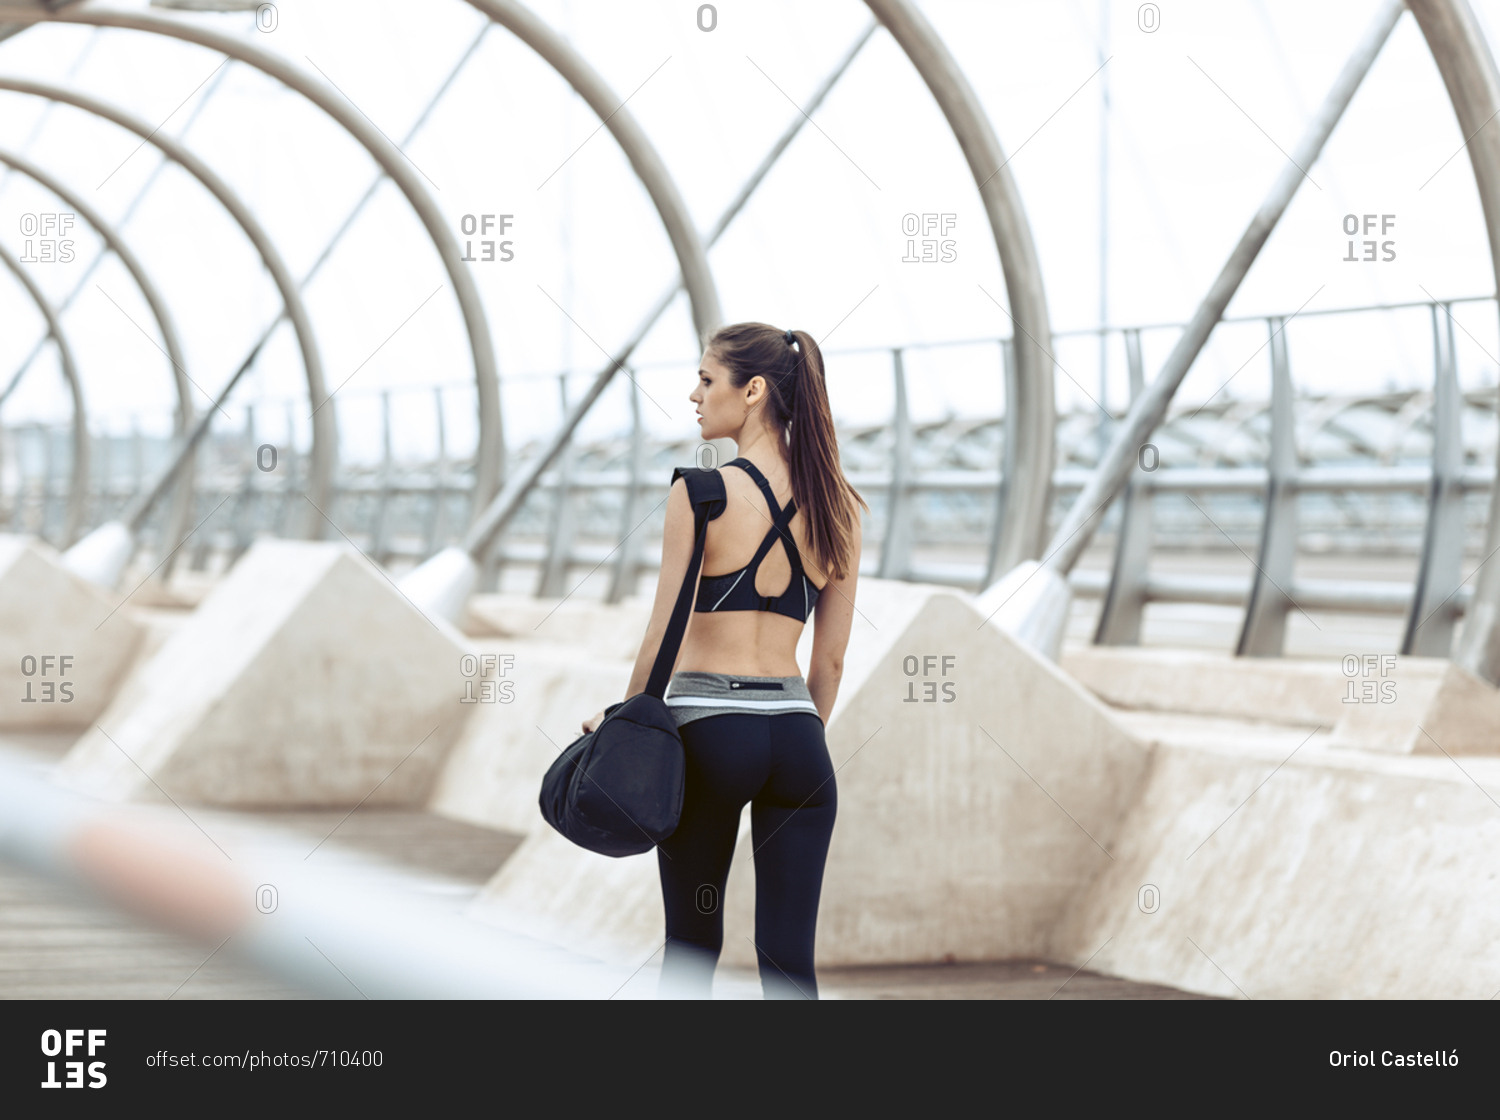 Rearview of woman in athletic wear carrying gym bag walking along bridge